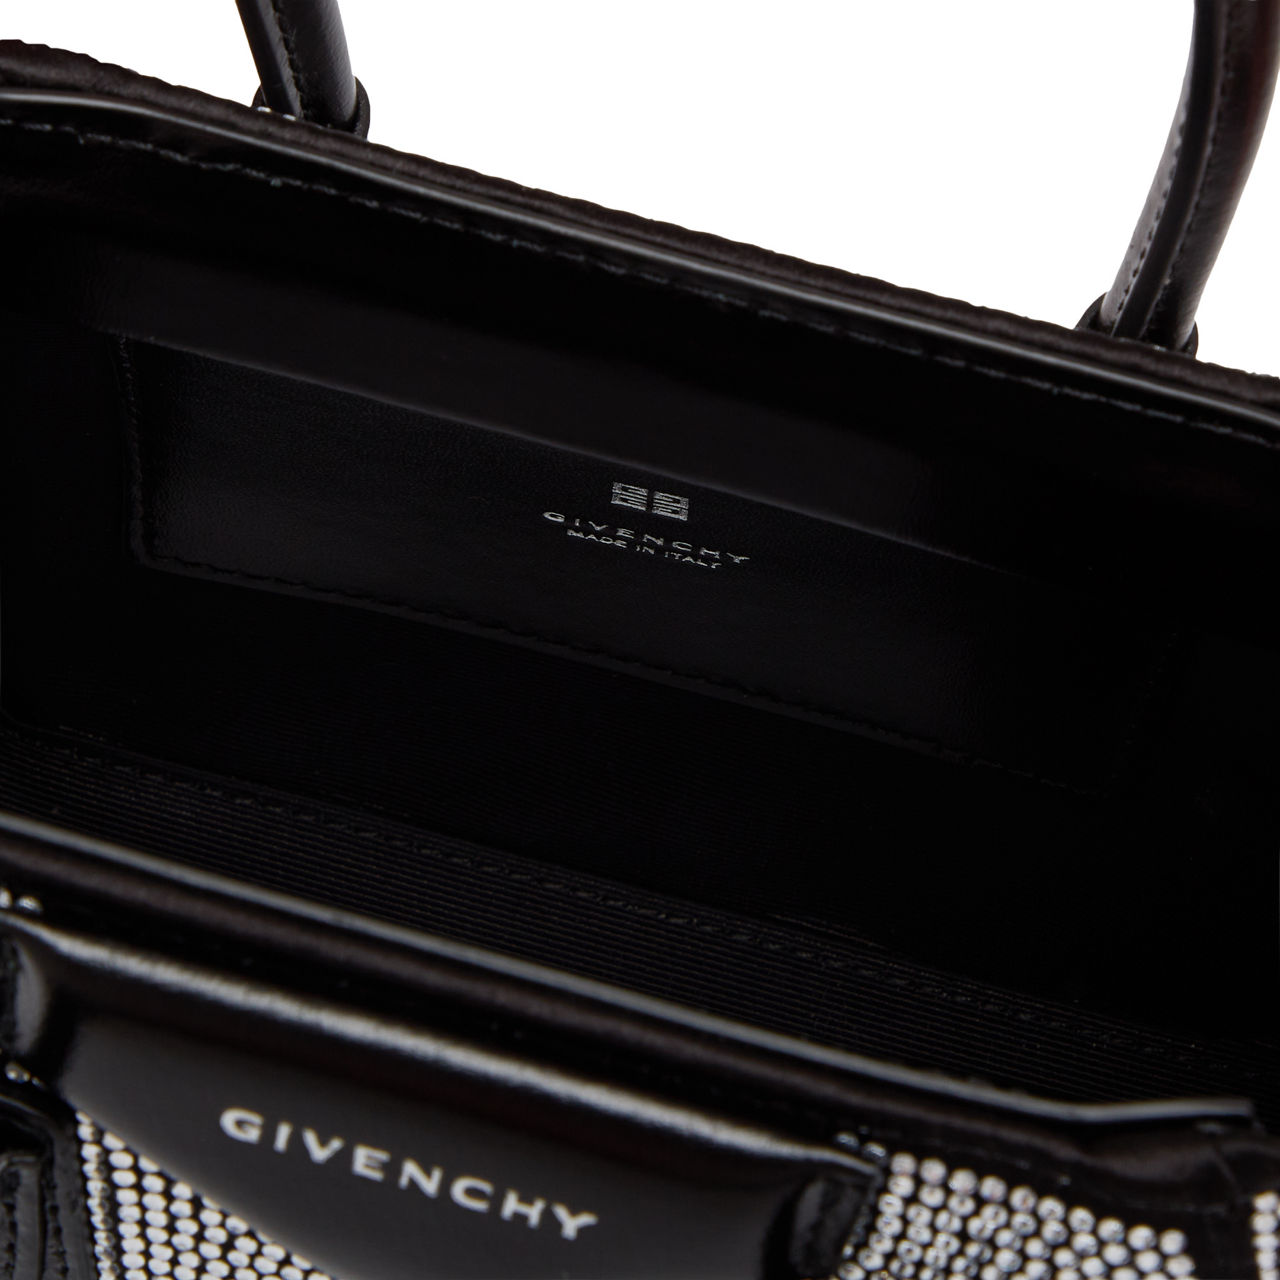 Givenchy Antigona Toy Embellished Top-Handle Bag